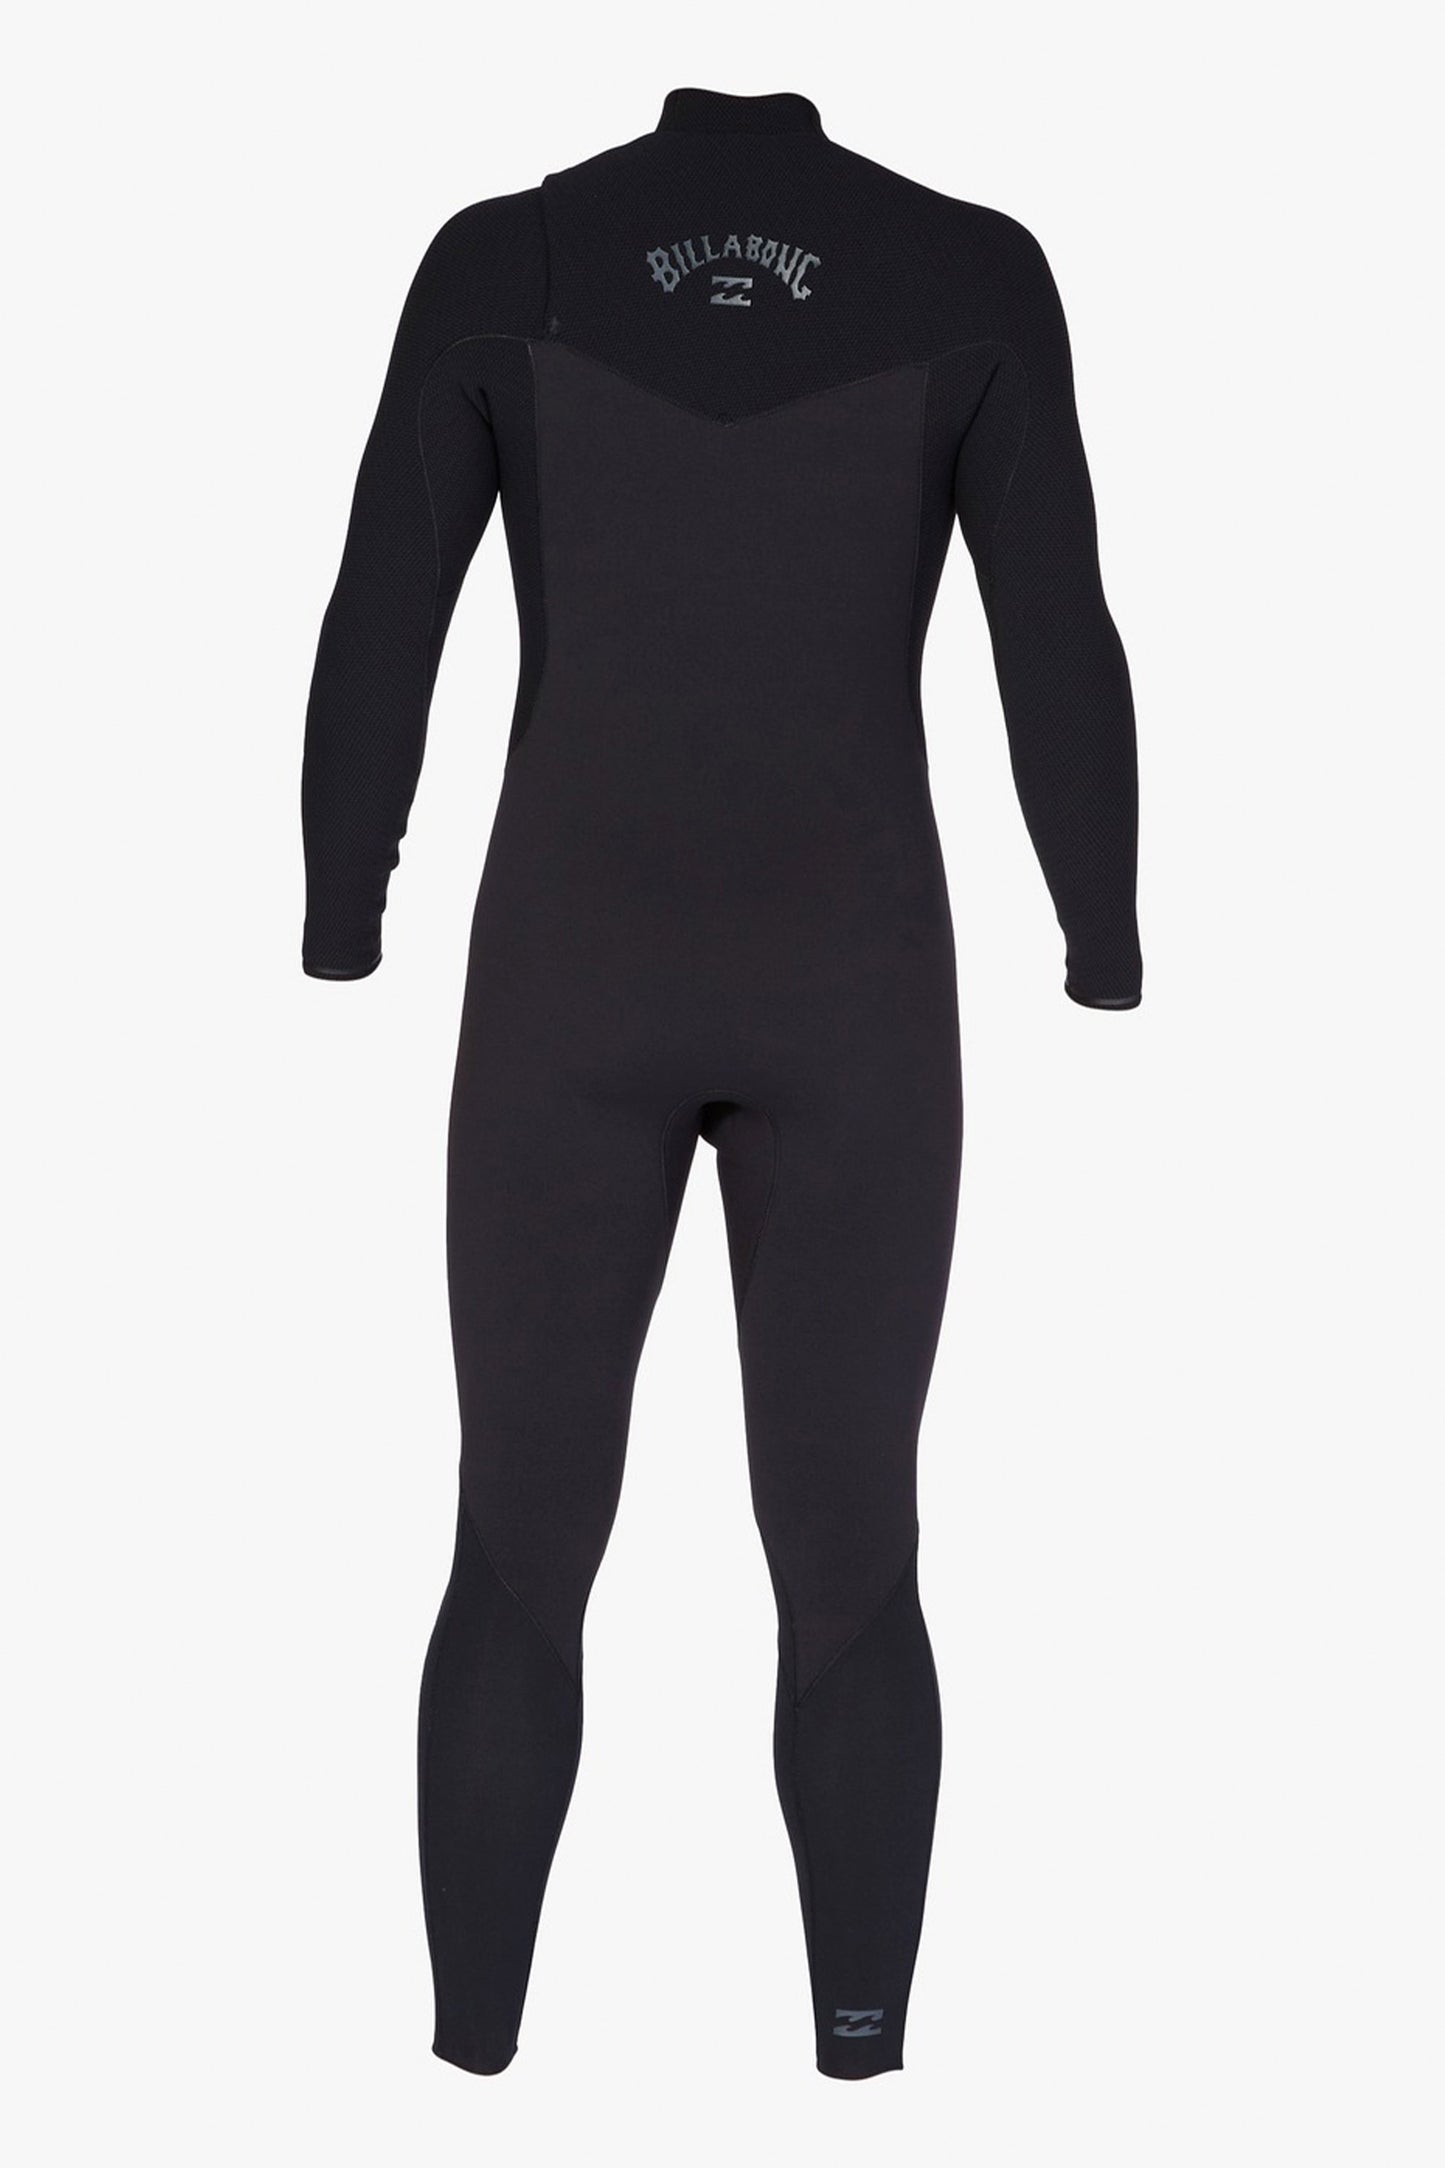    Pukas-Surf-Shop-Billabong-Wetsuit-5-4mm-Revolution-Men-Black